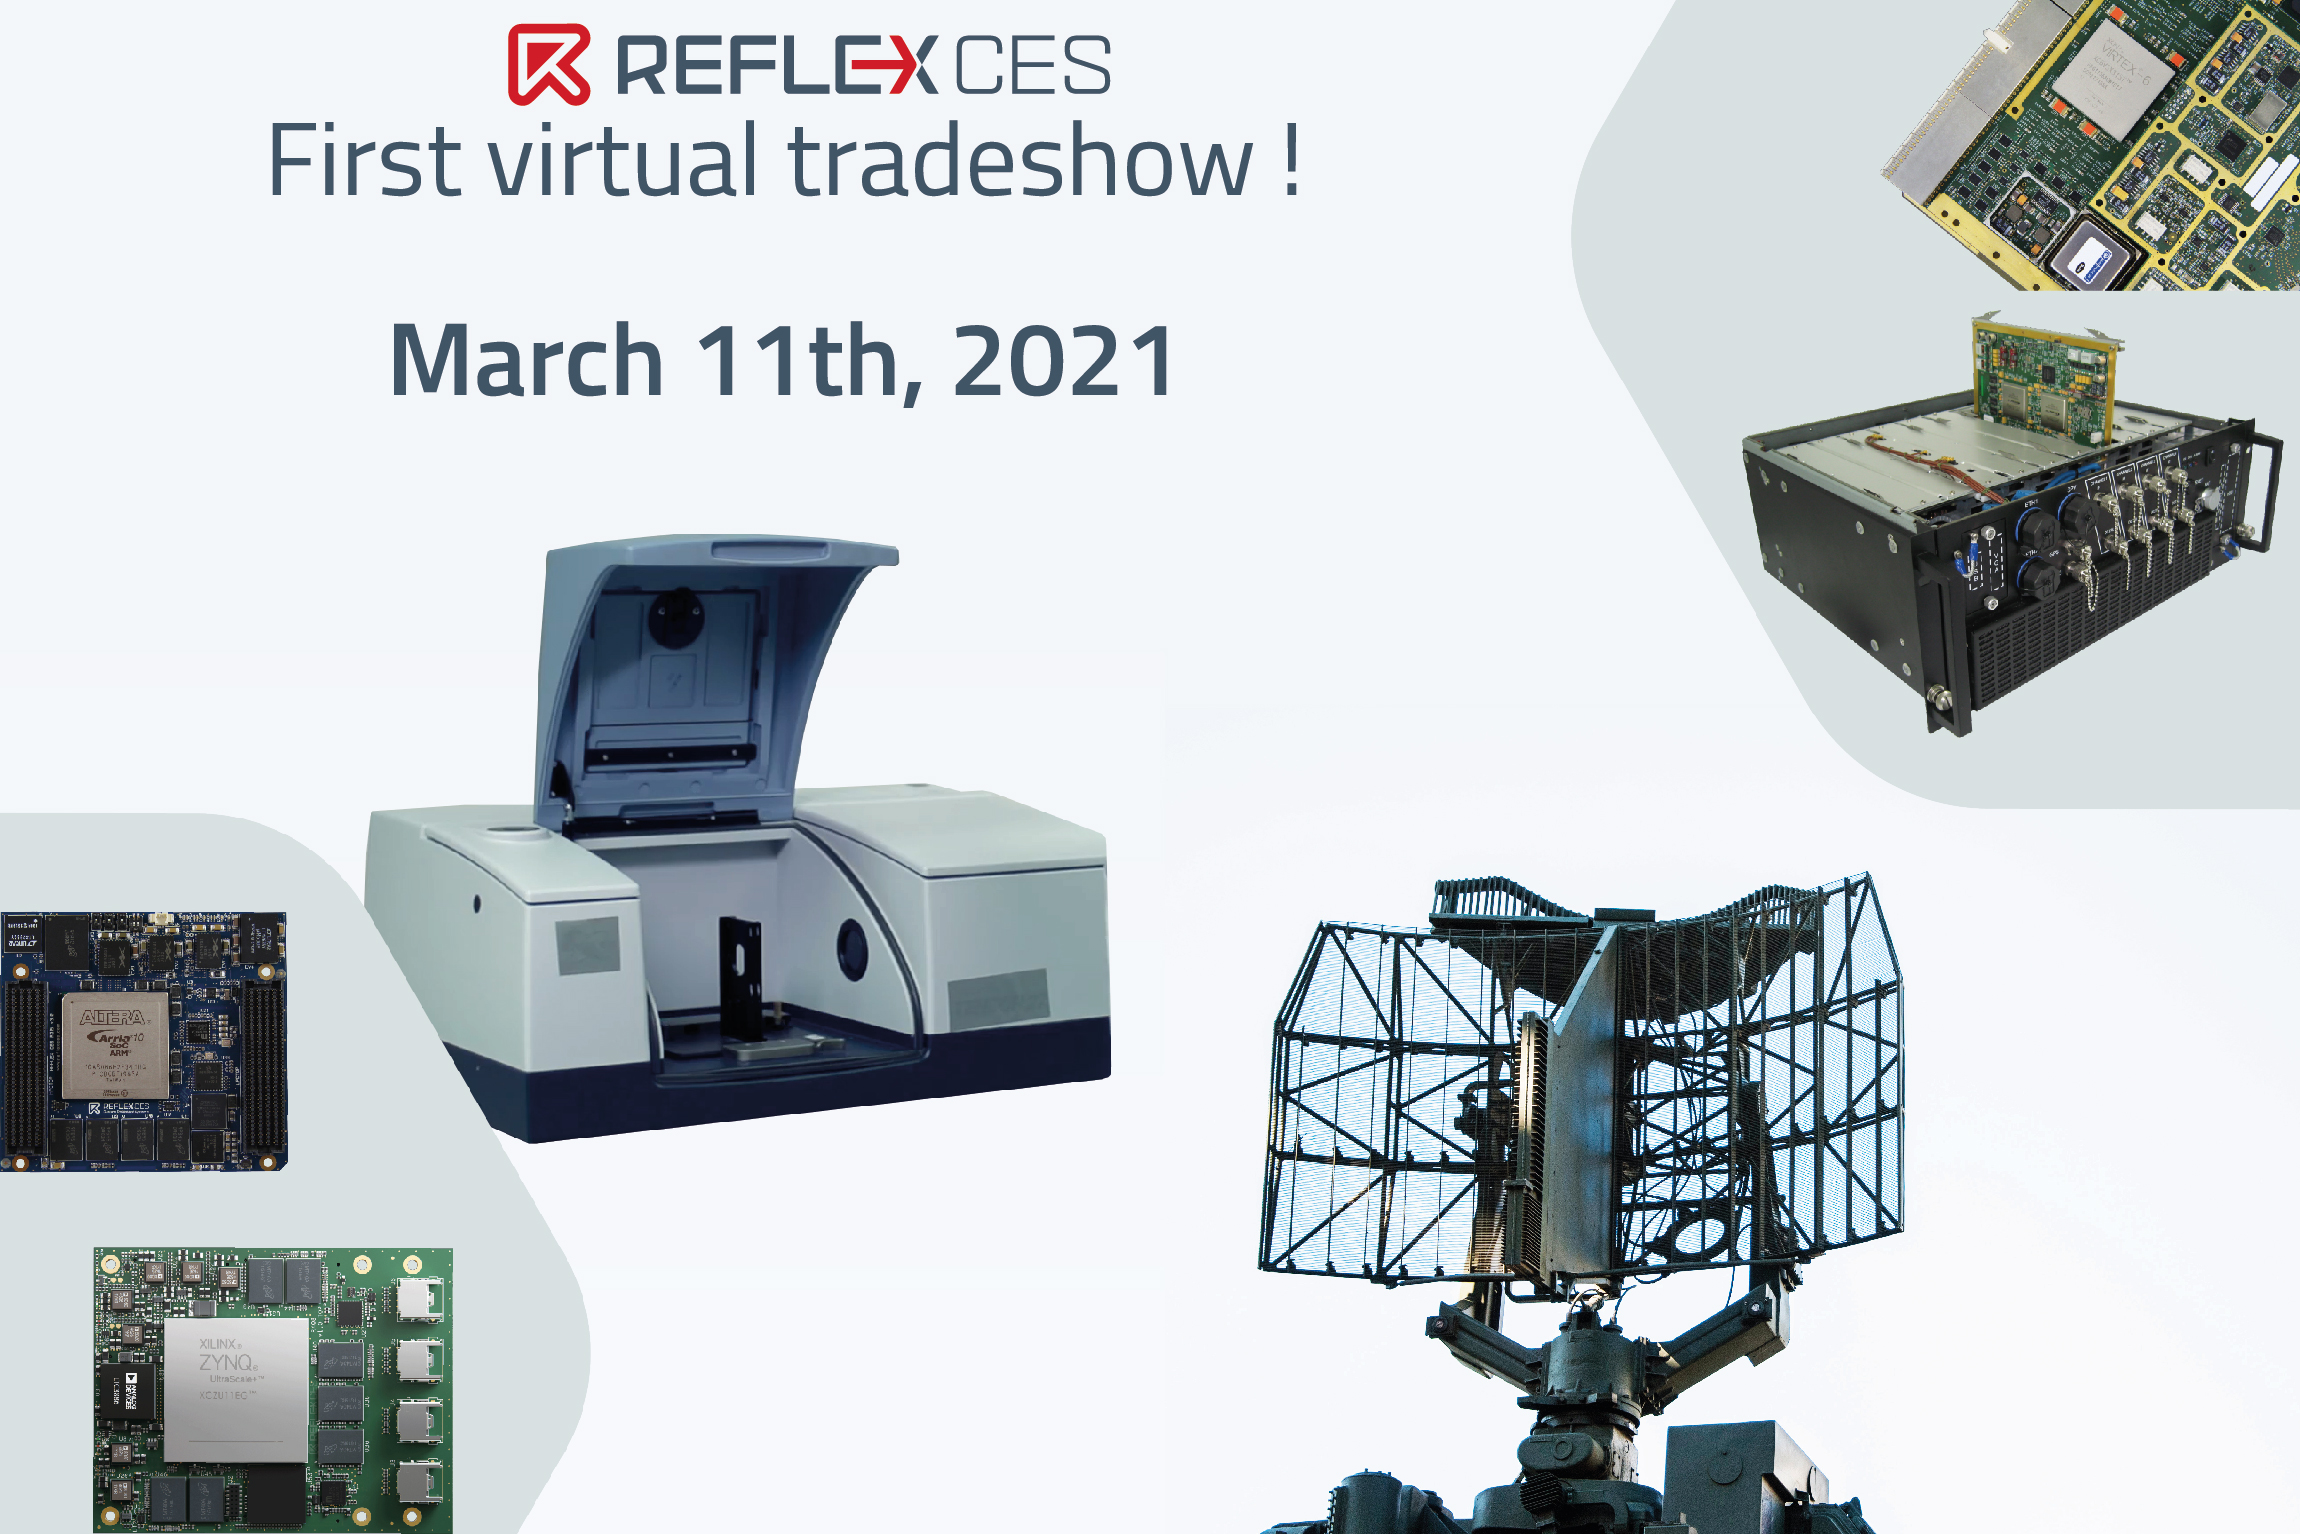 REFLEX CES’ first virtual event